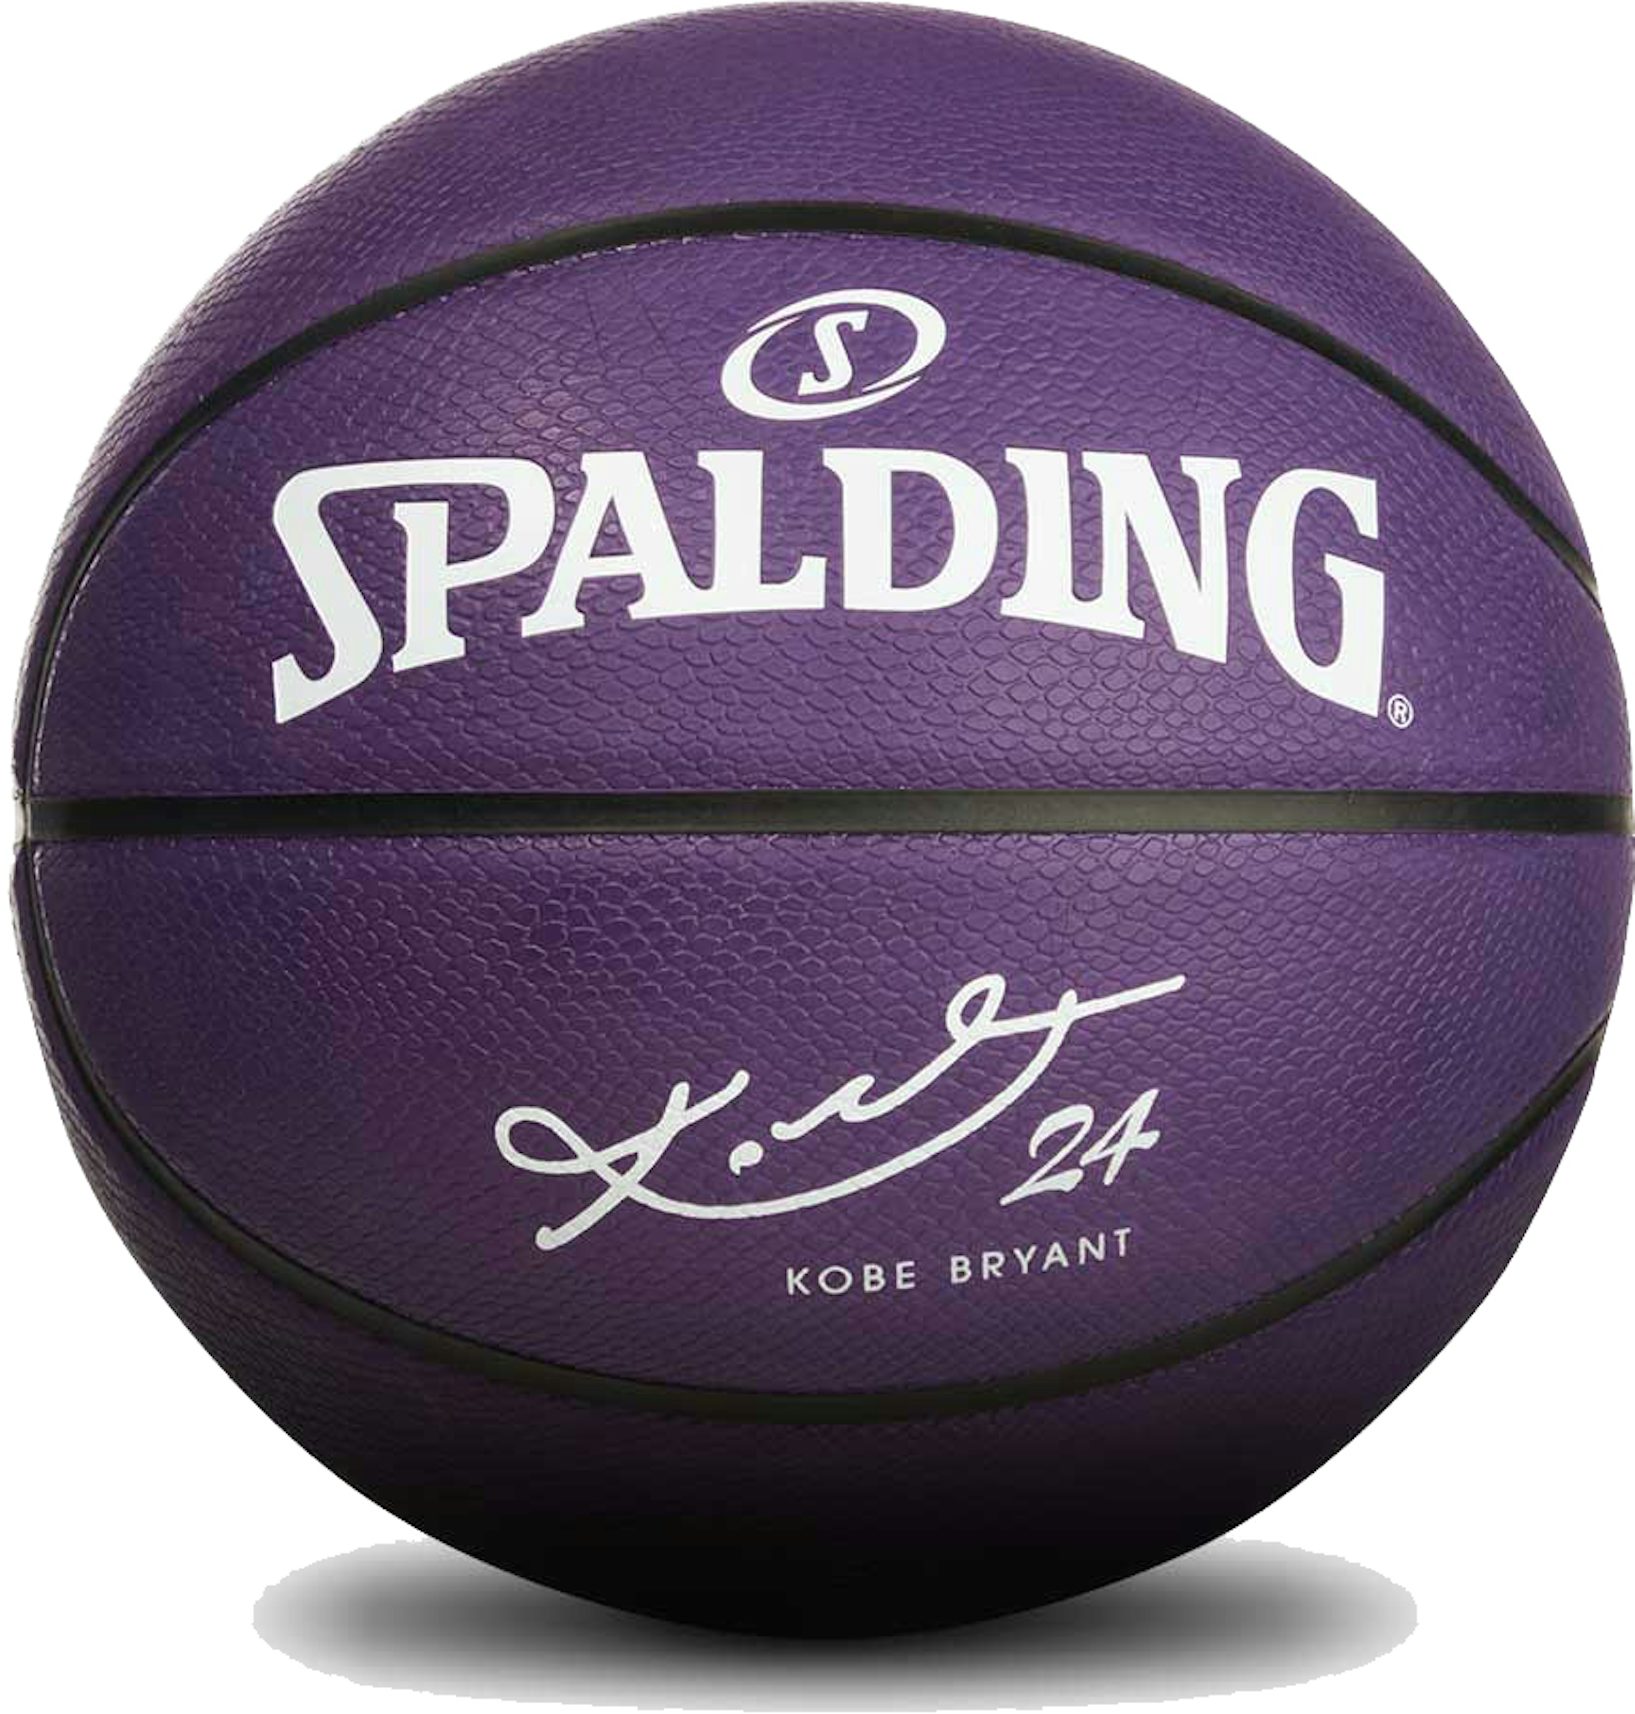 WATCH: Michael V draws tribute to Kobe Bryant